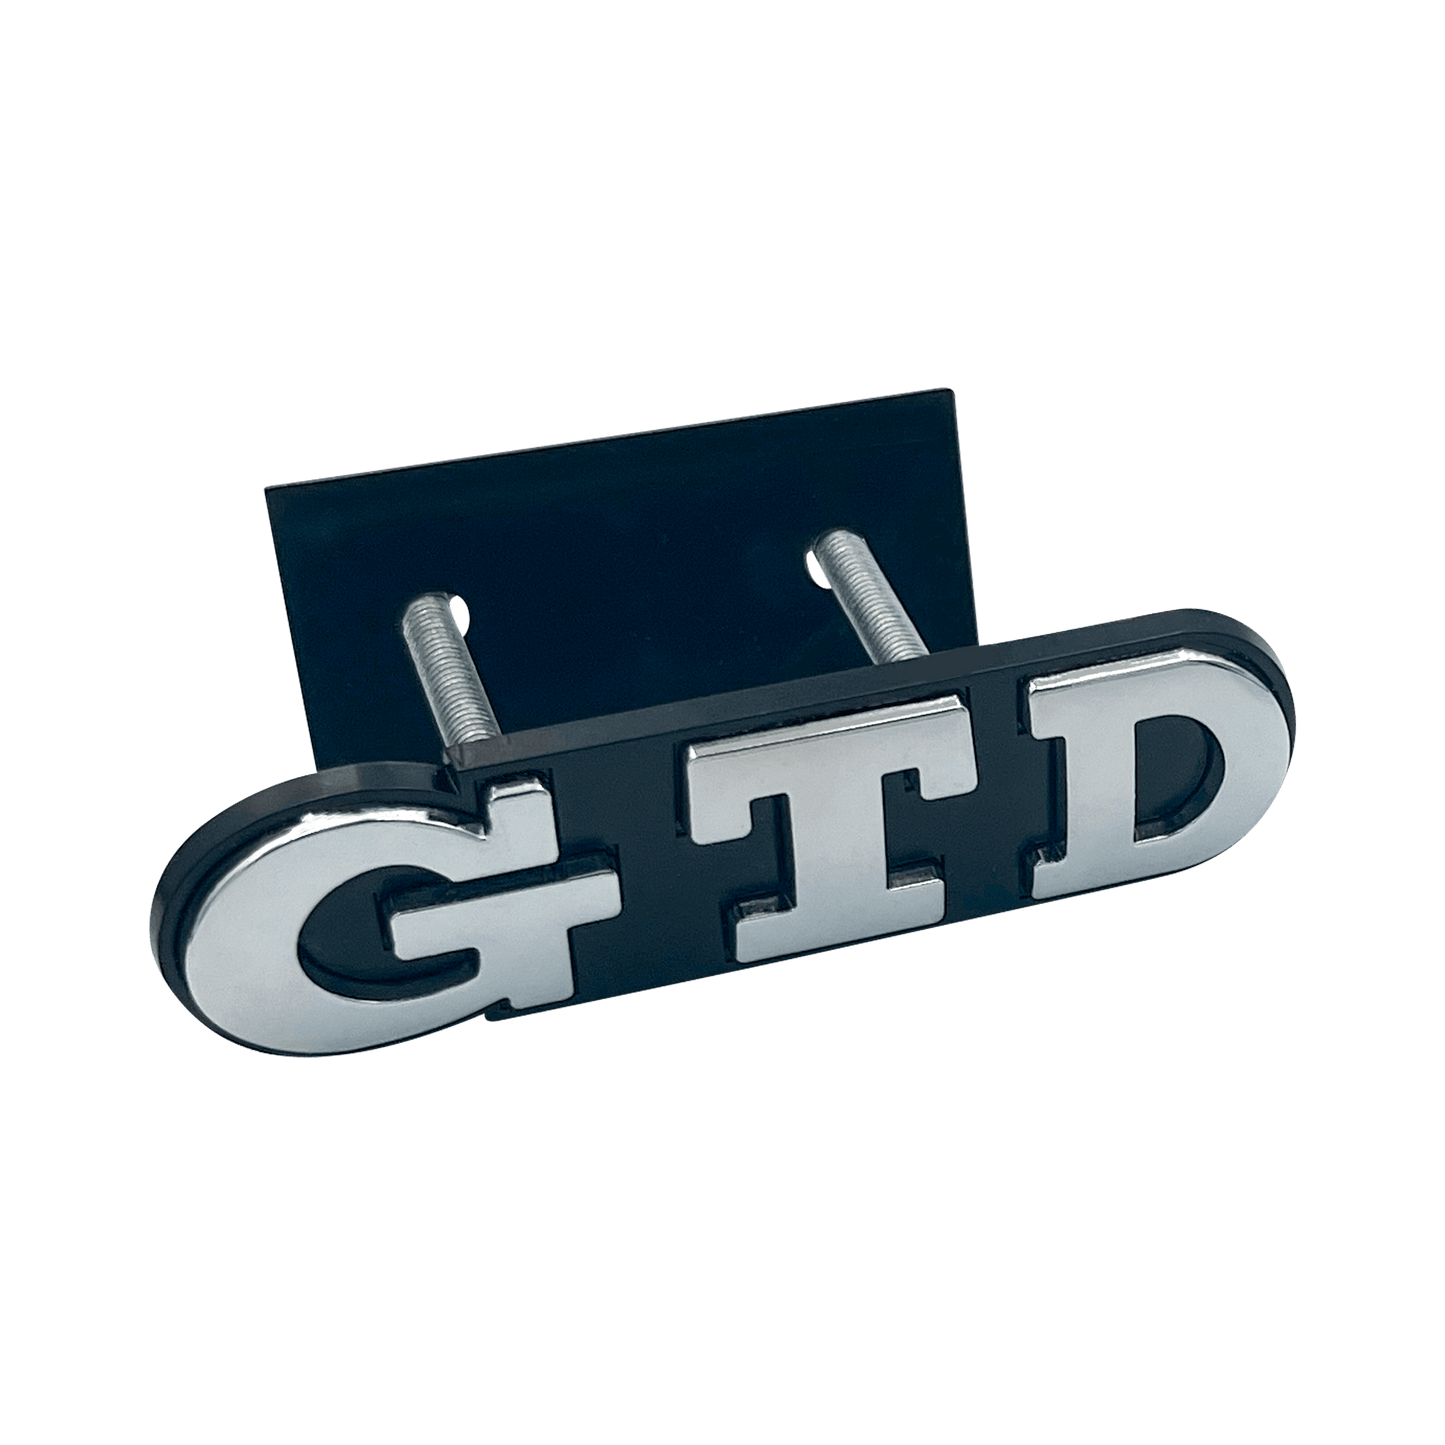 Chrome VW GTD Front Emblem Badge 